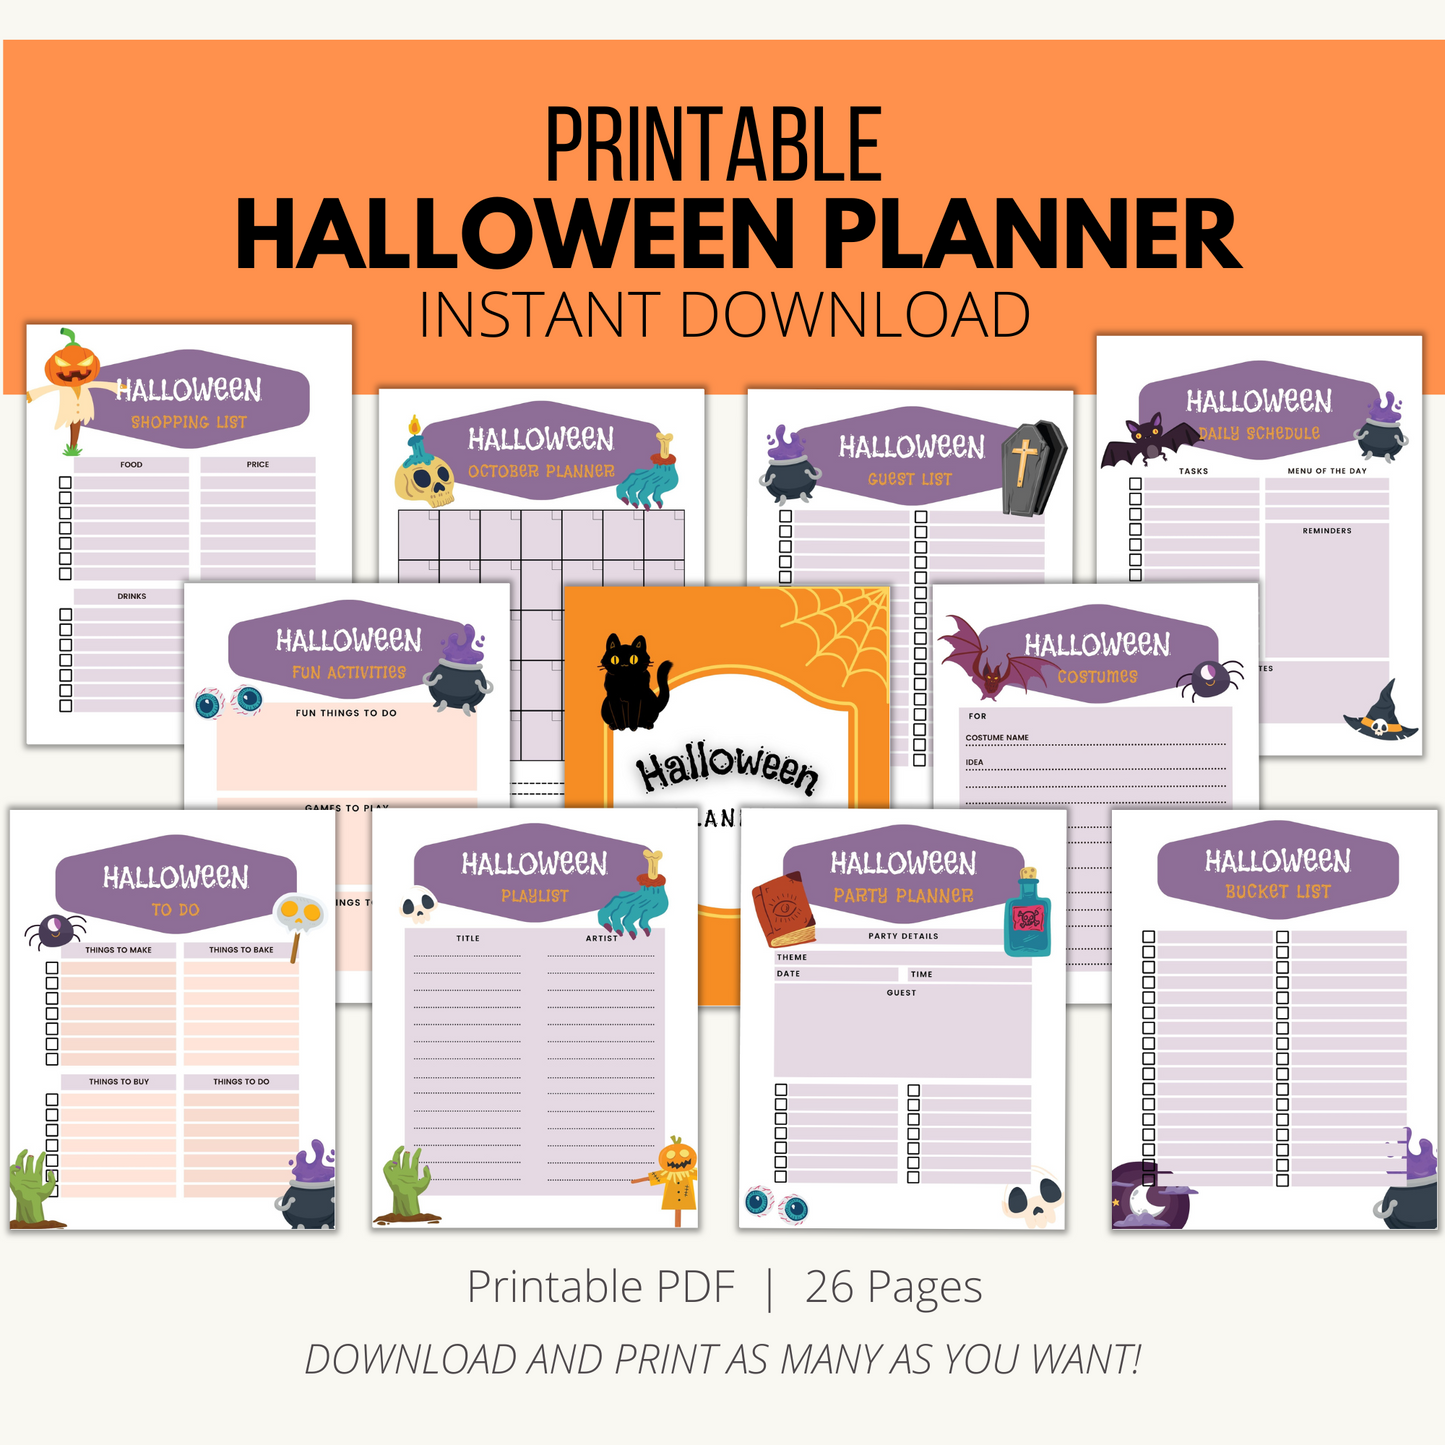 Printable Halloween Planner